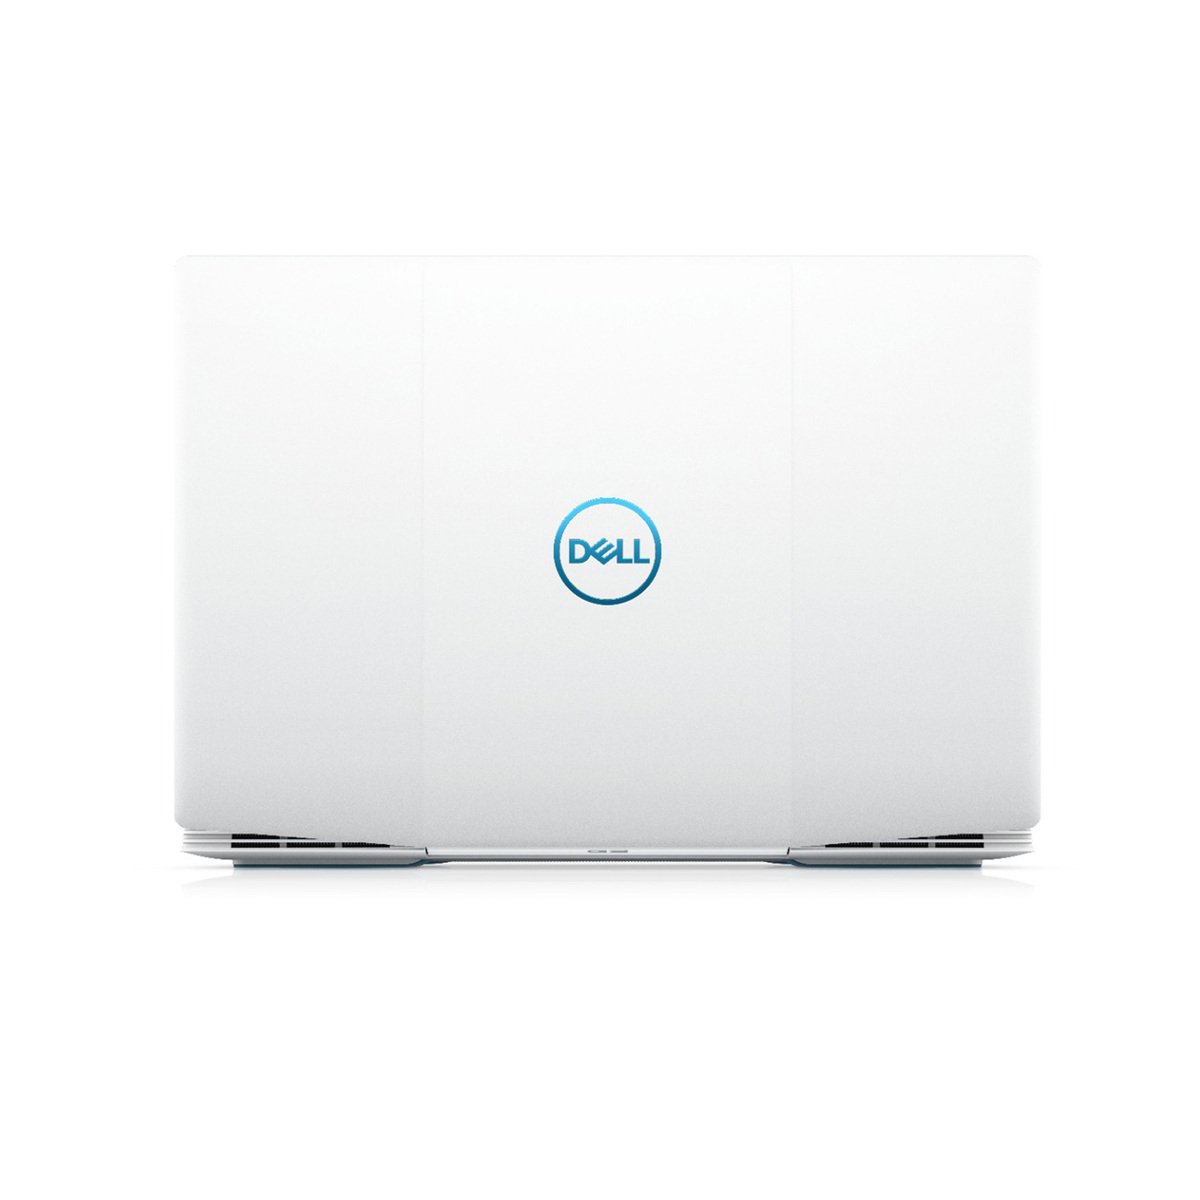 Dell G3-15-3590 (3590-G3-0008-WHT) Gaming Laptop, Intel Core i7-9750H Processor, 8GB RAM, 512GB SSD, 6GB NVIDIA Ge Force GTX 1660 Ti, Windows 10, 15.6inch, White